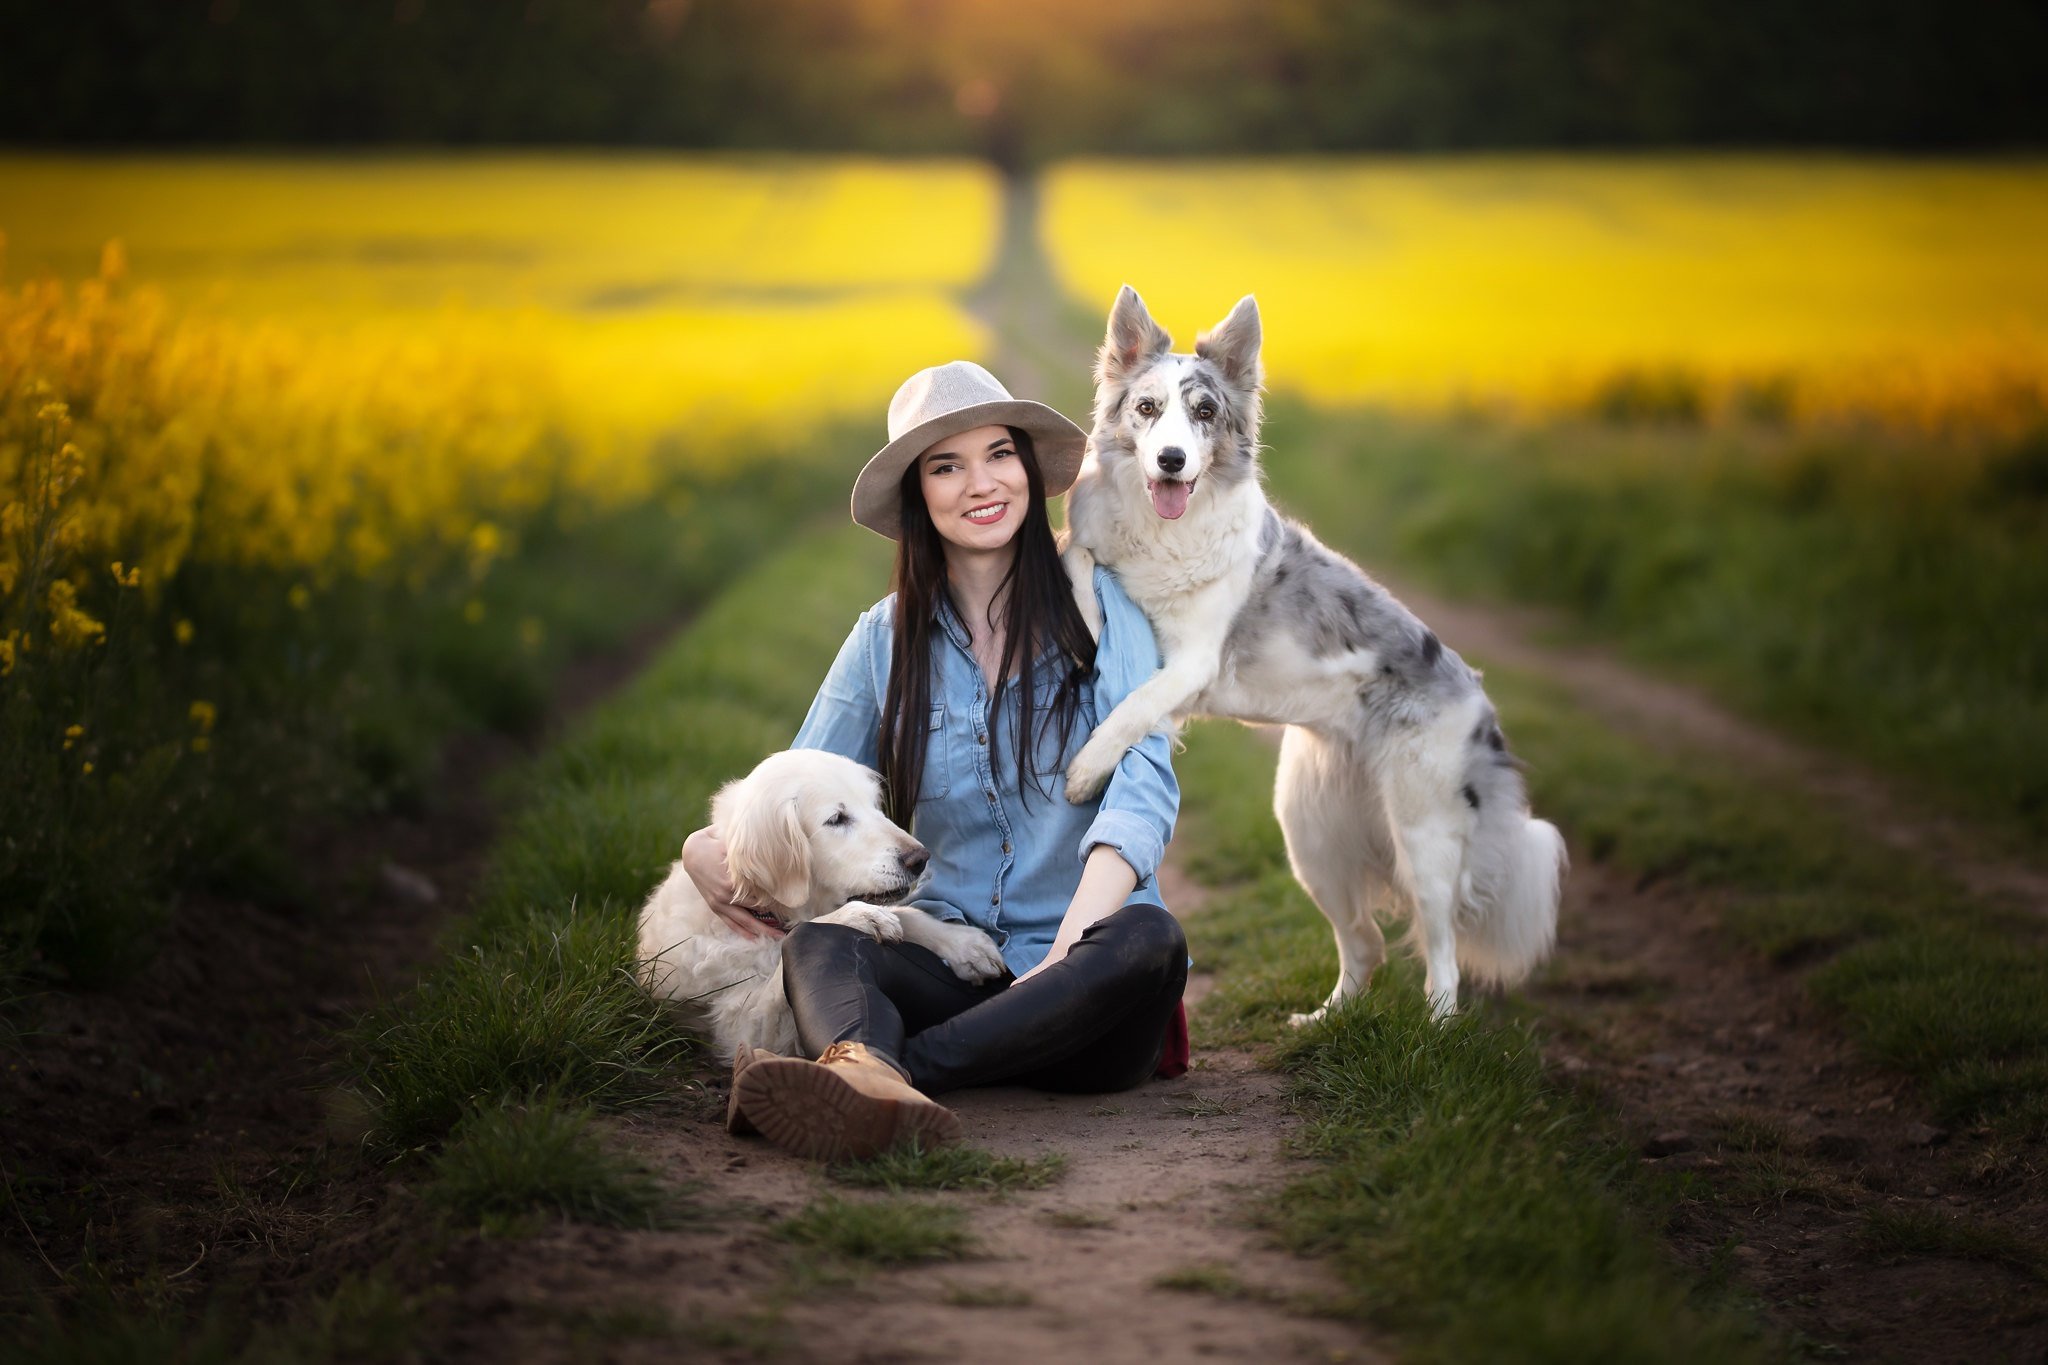 Картинка девушки с собакой. Девушка с собакой. Красивая девушка с собакой. Фотосессия с собакой. Девушка с щенком.